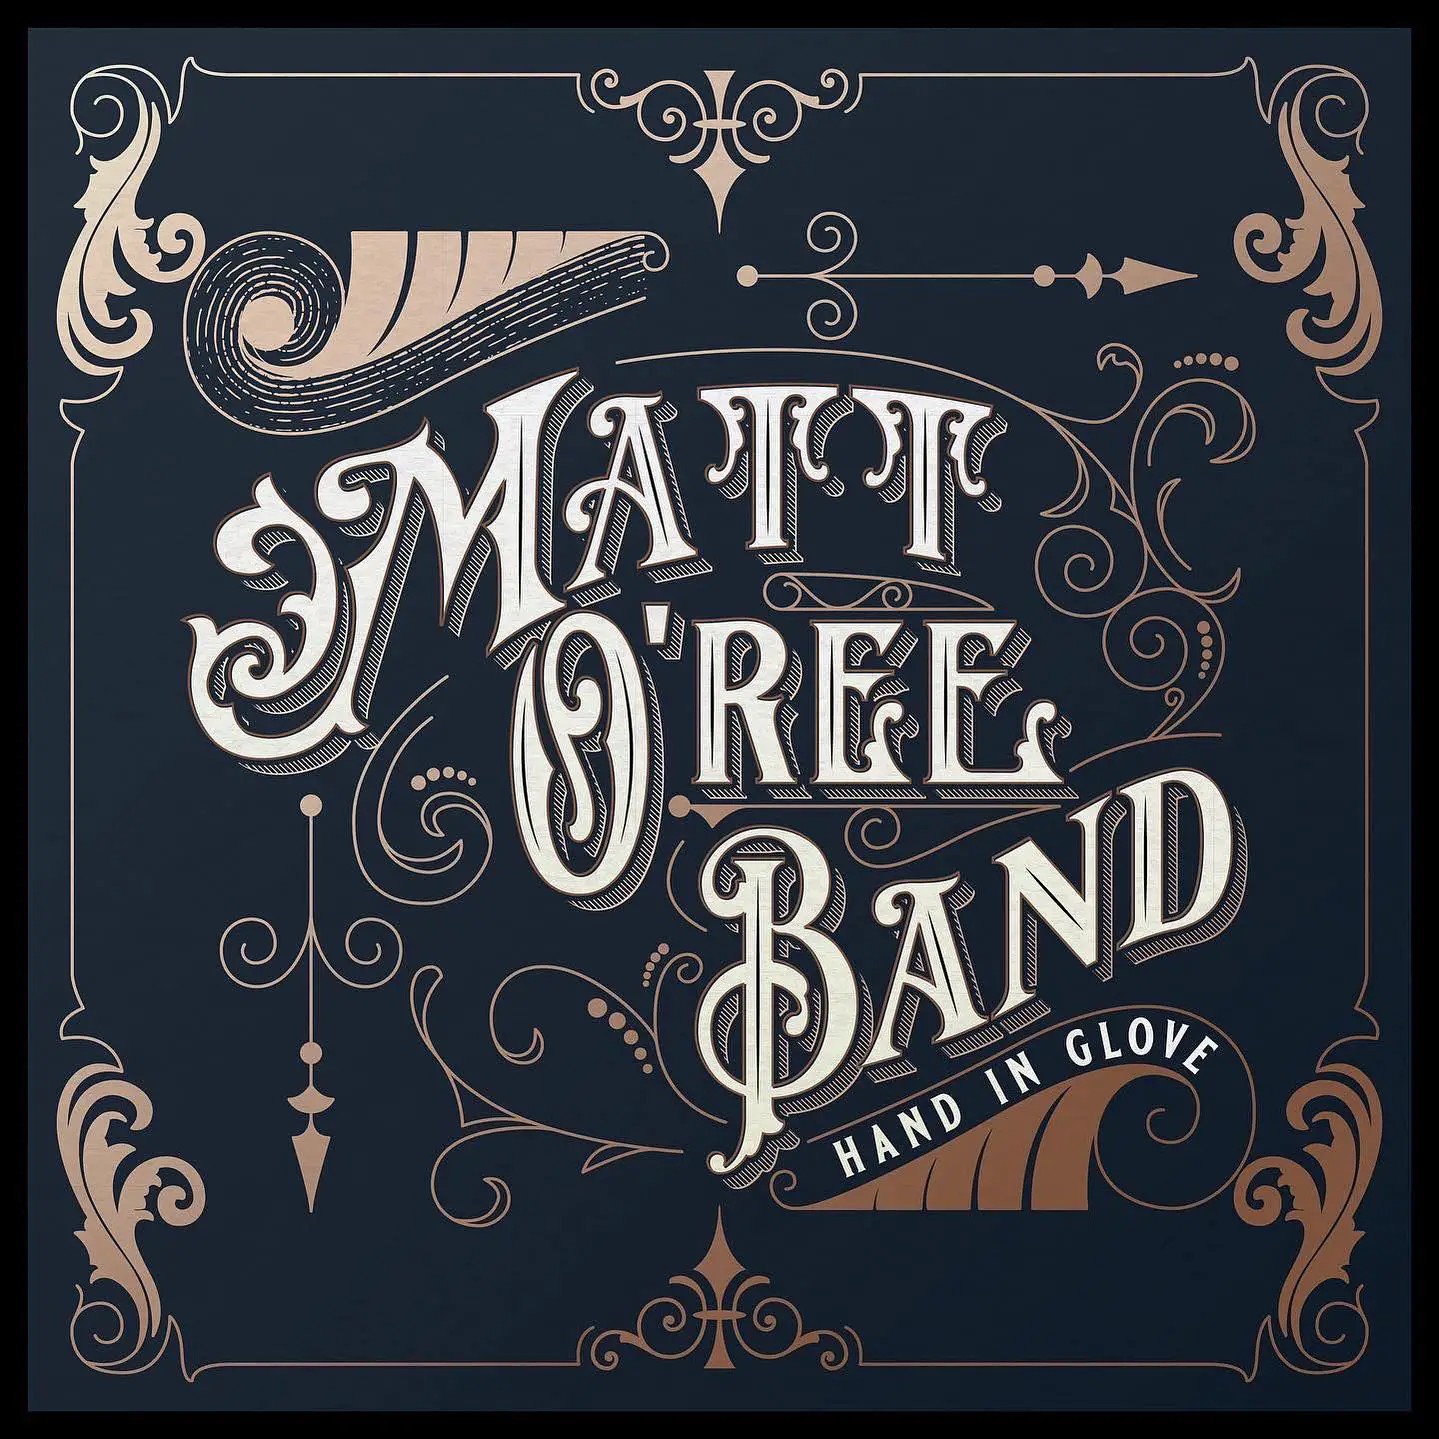 Matt O’Ree Band ‘Hand in Glove’ album artwork